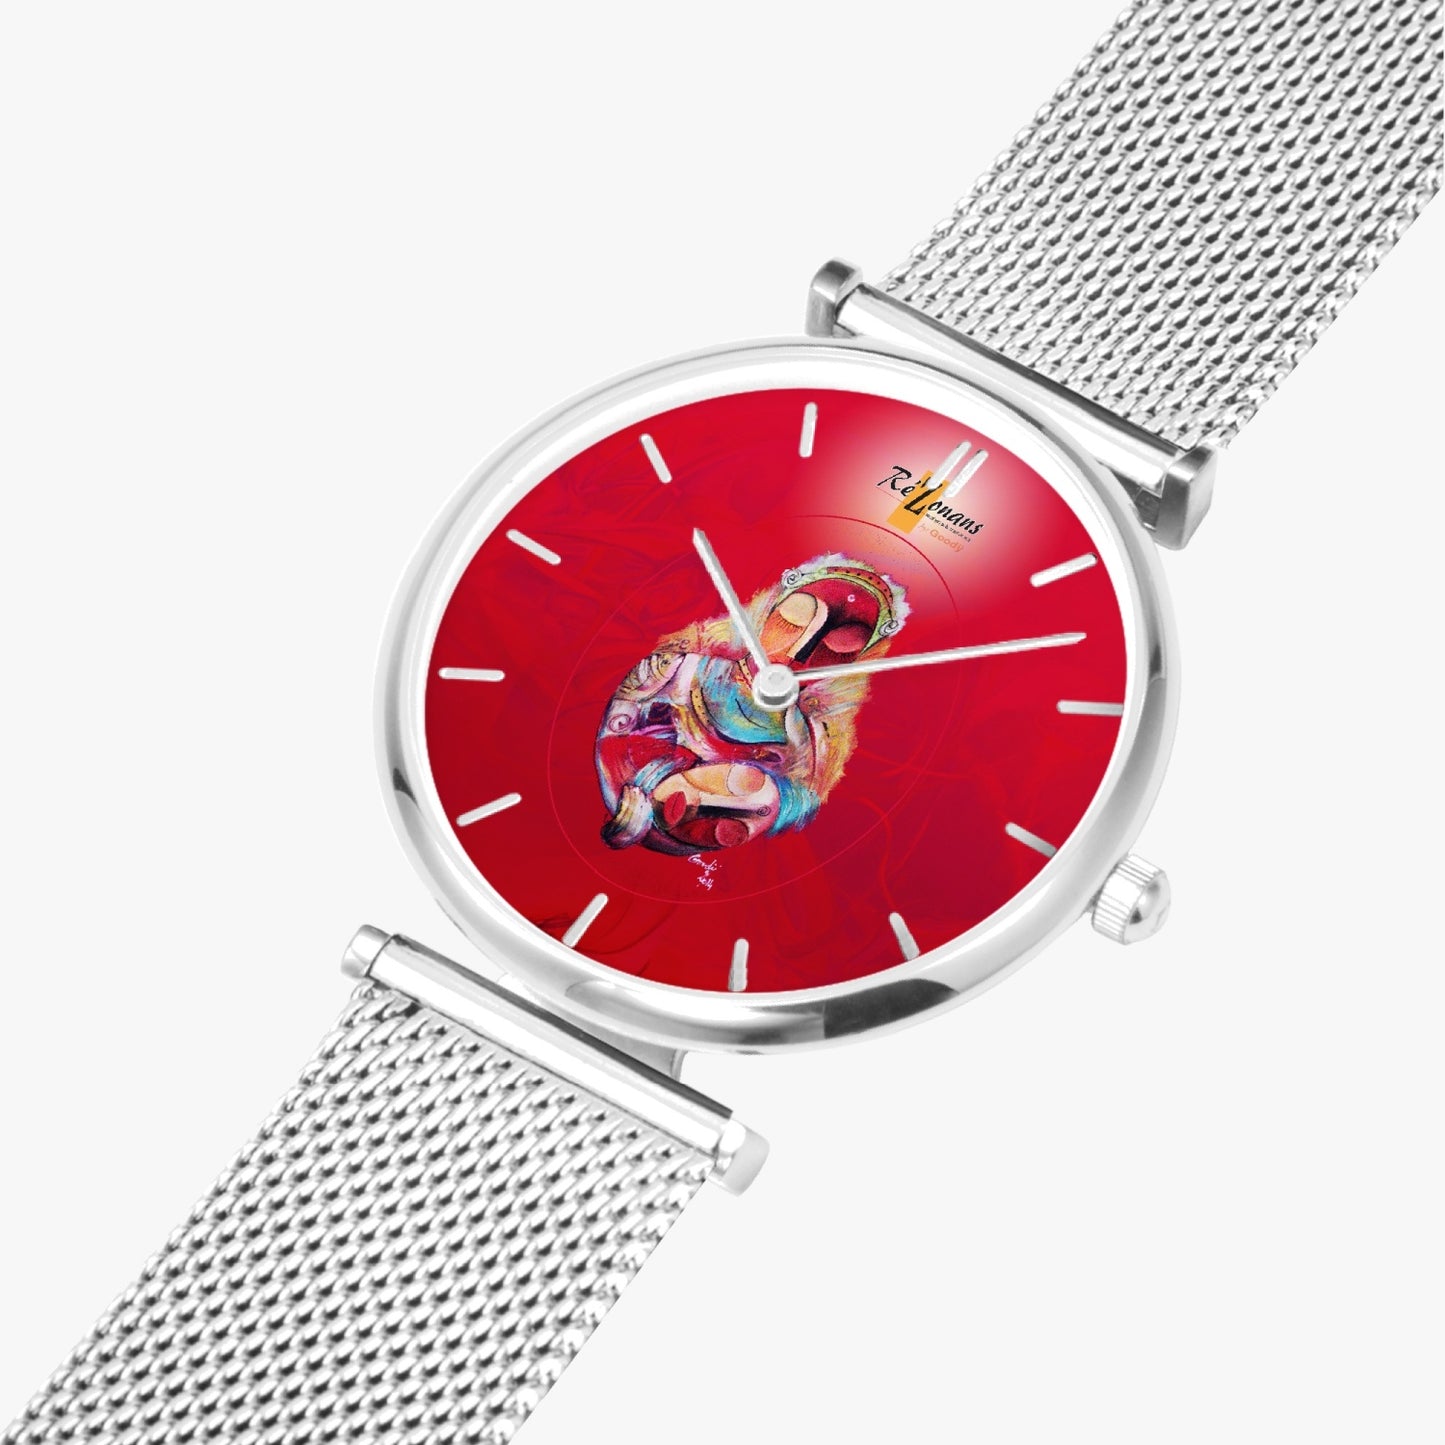 Ultra thin fashion quartz watch "Manmanlove" (with indicators)